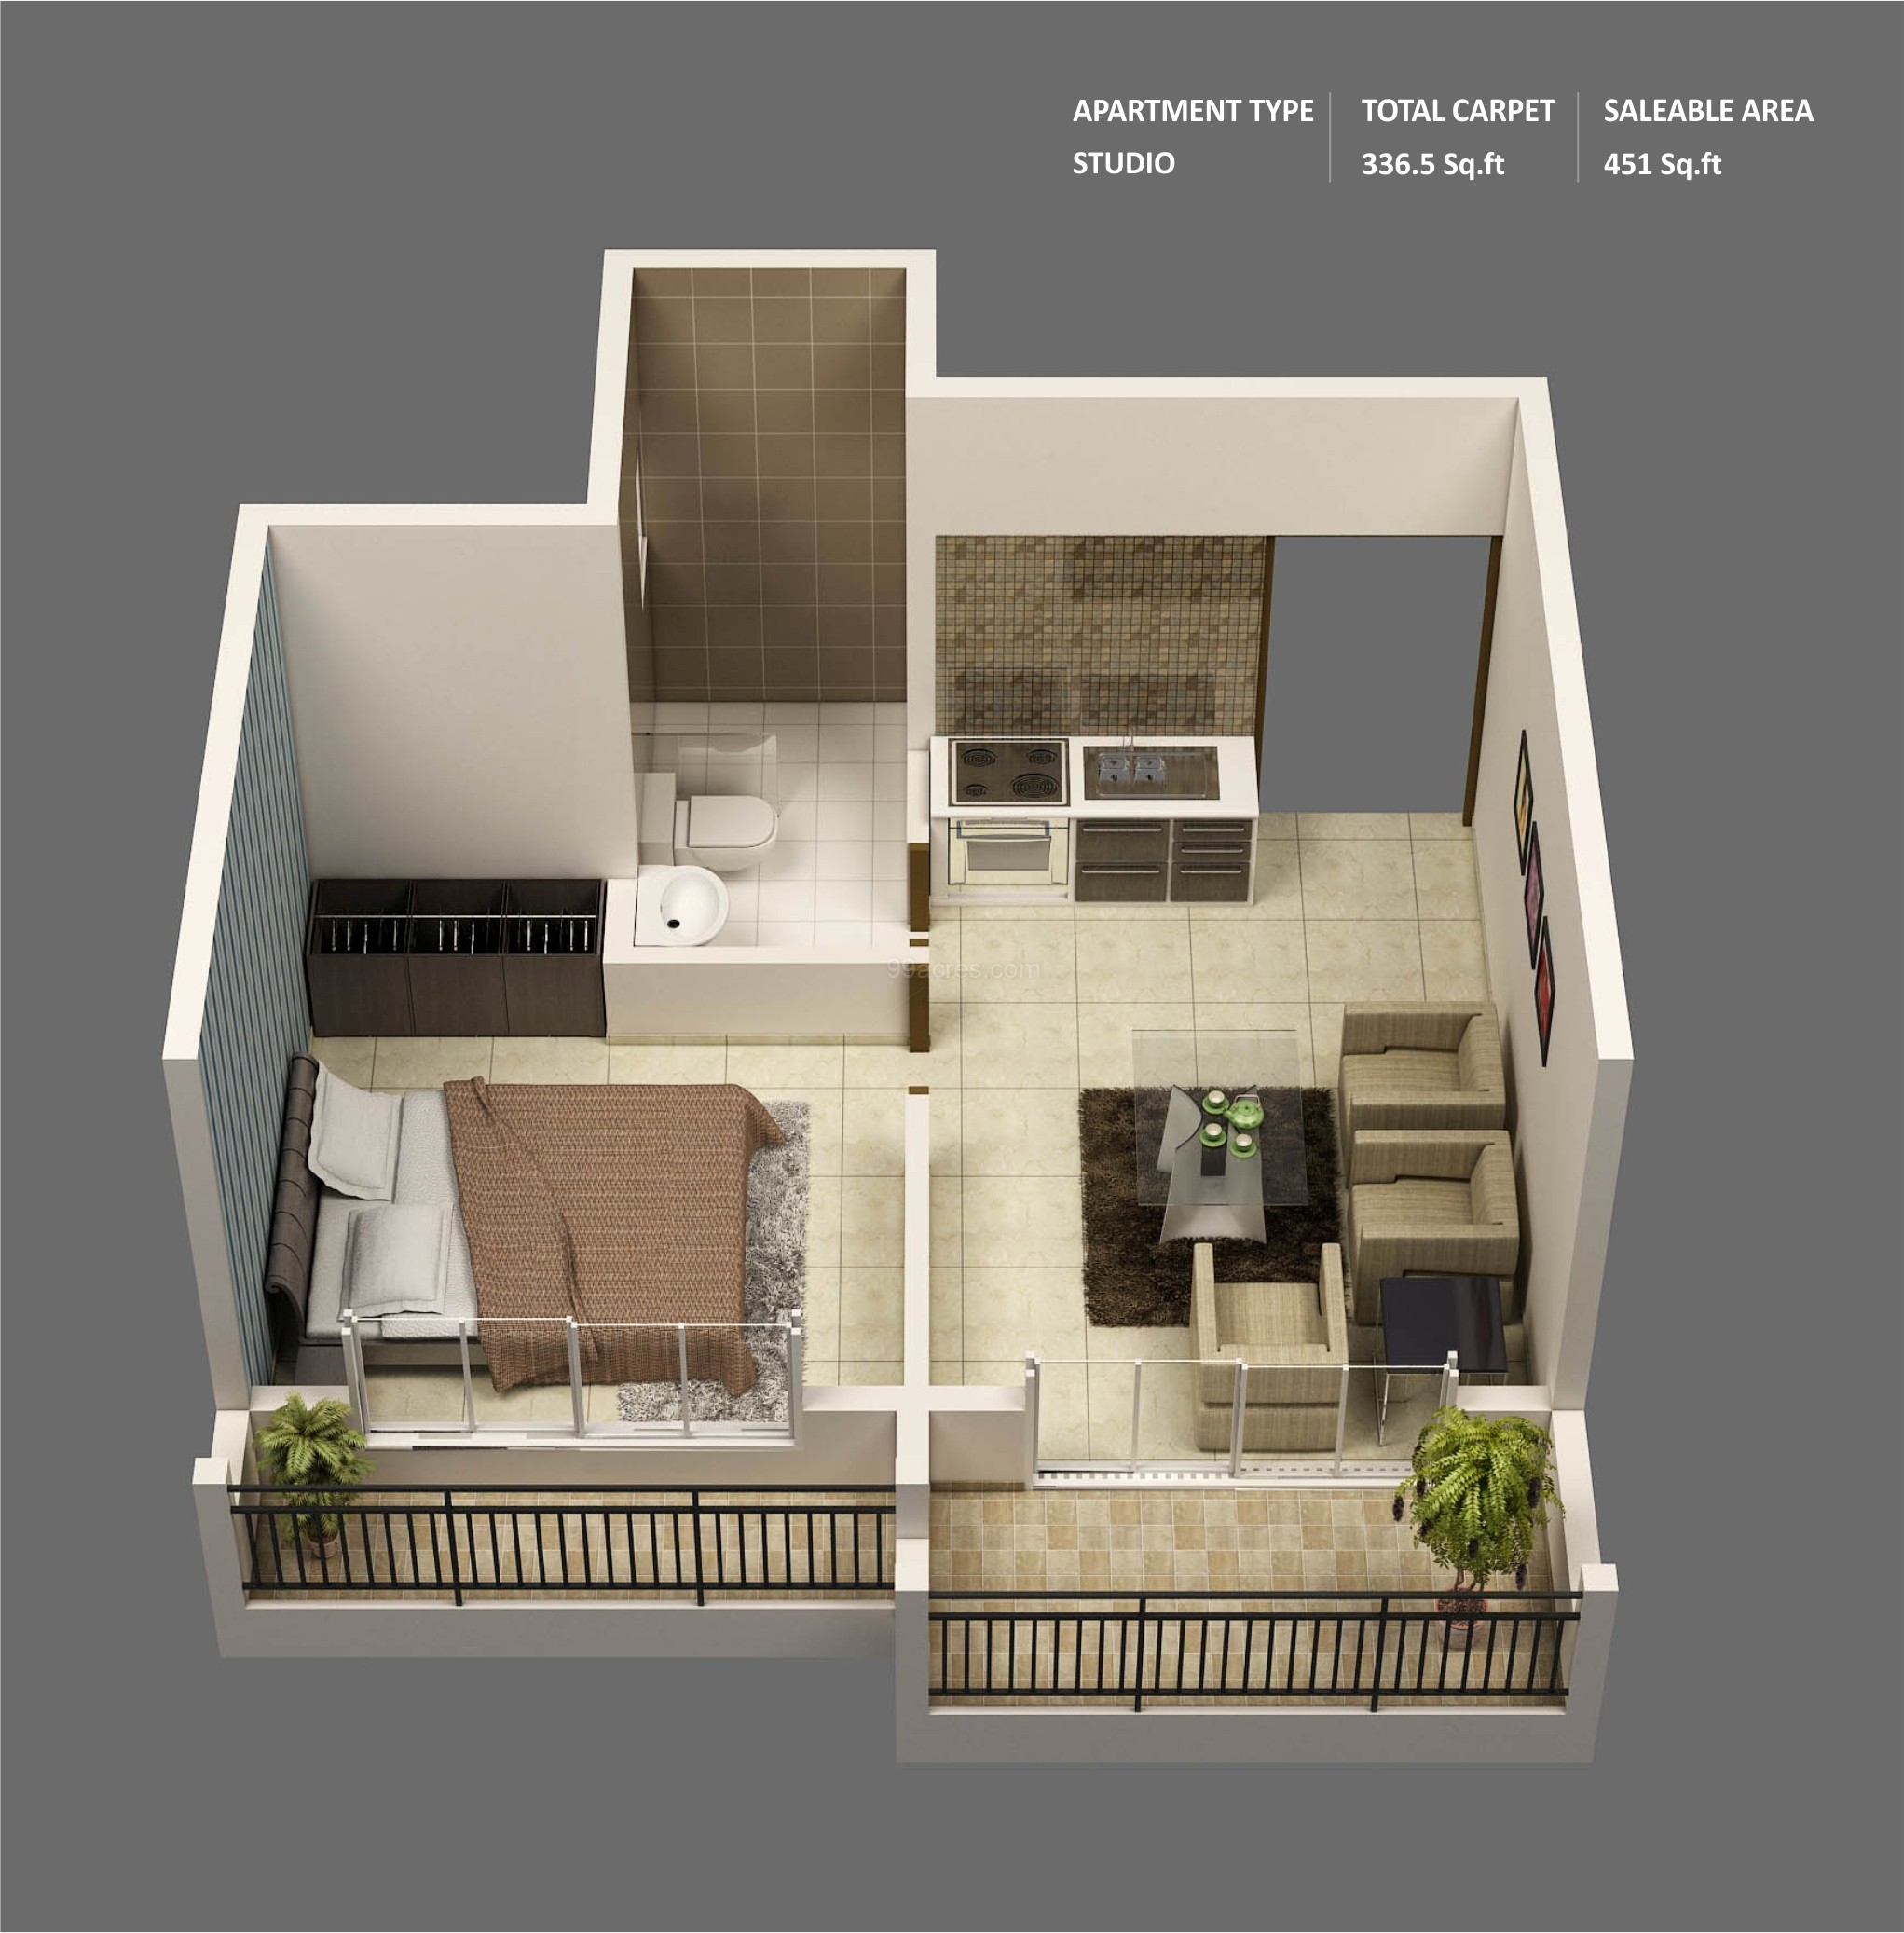 Planning Studio Apartment Floor Plans | Ideas 4 Homes